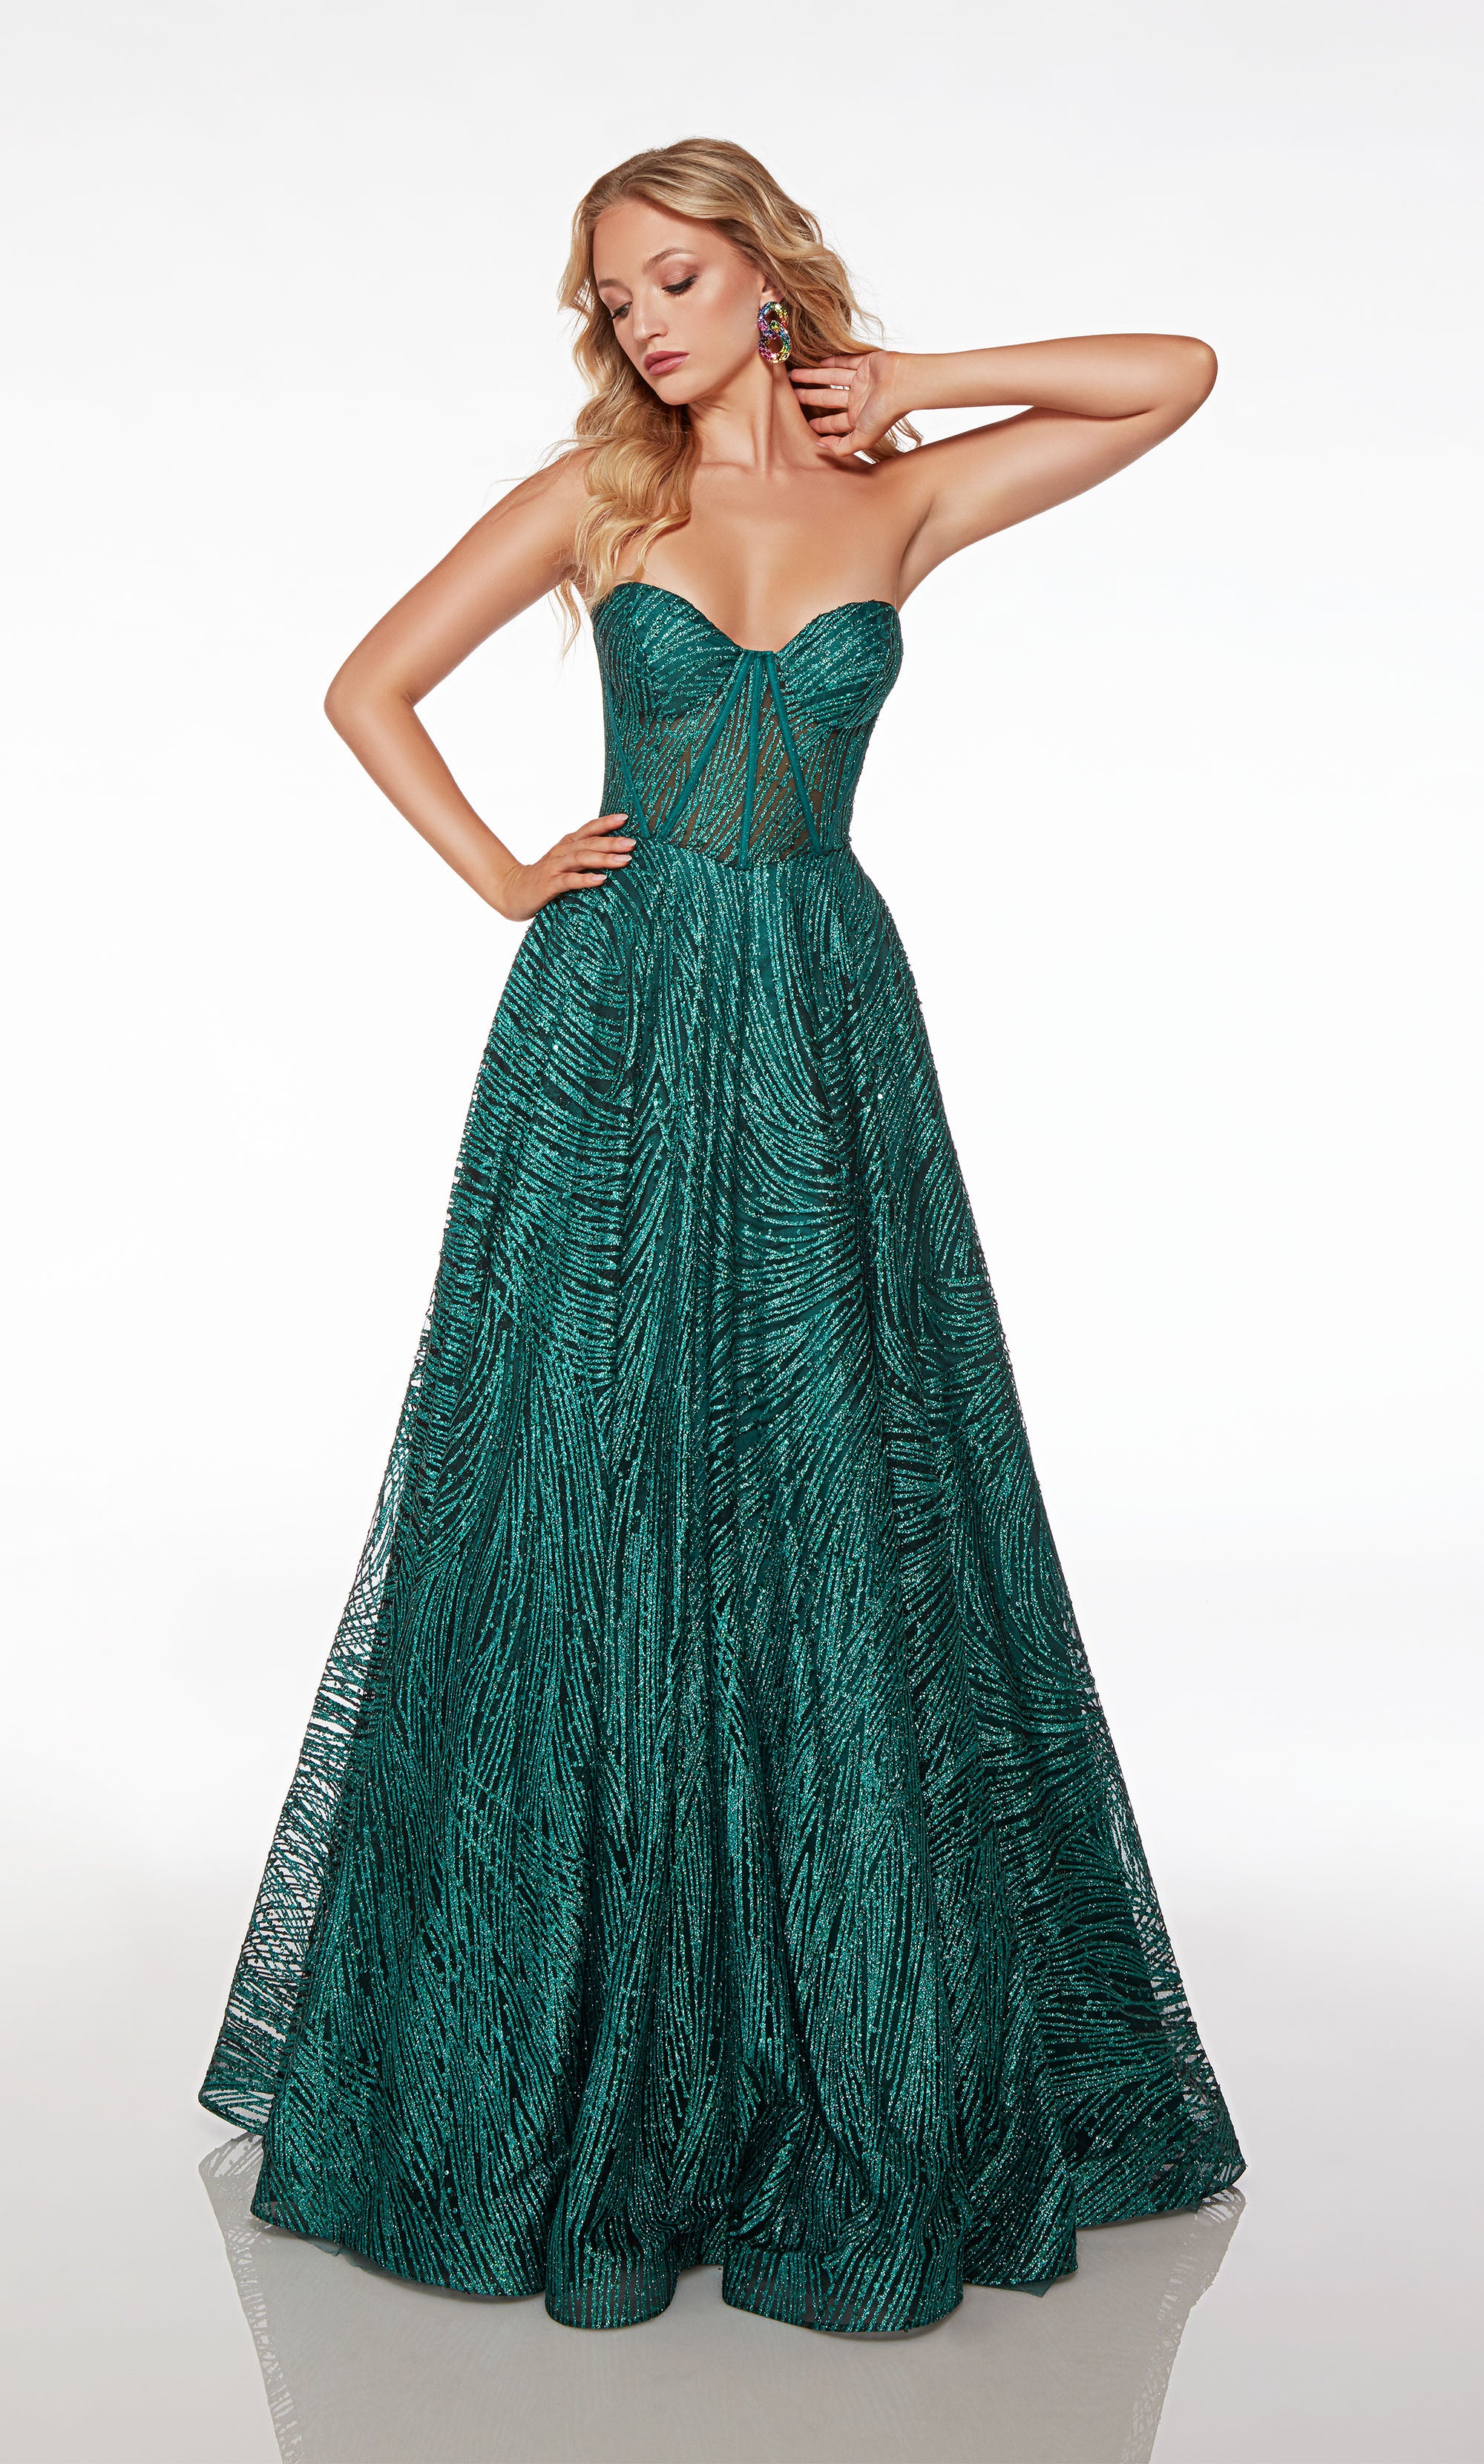 Stunning Dark Green Strapless Prom Dress Sequins Long With Slit